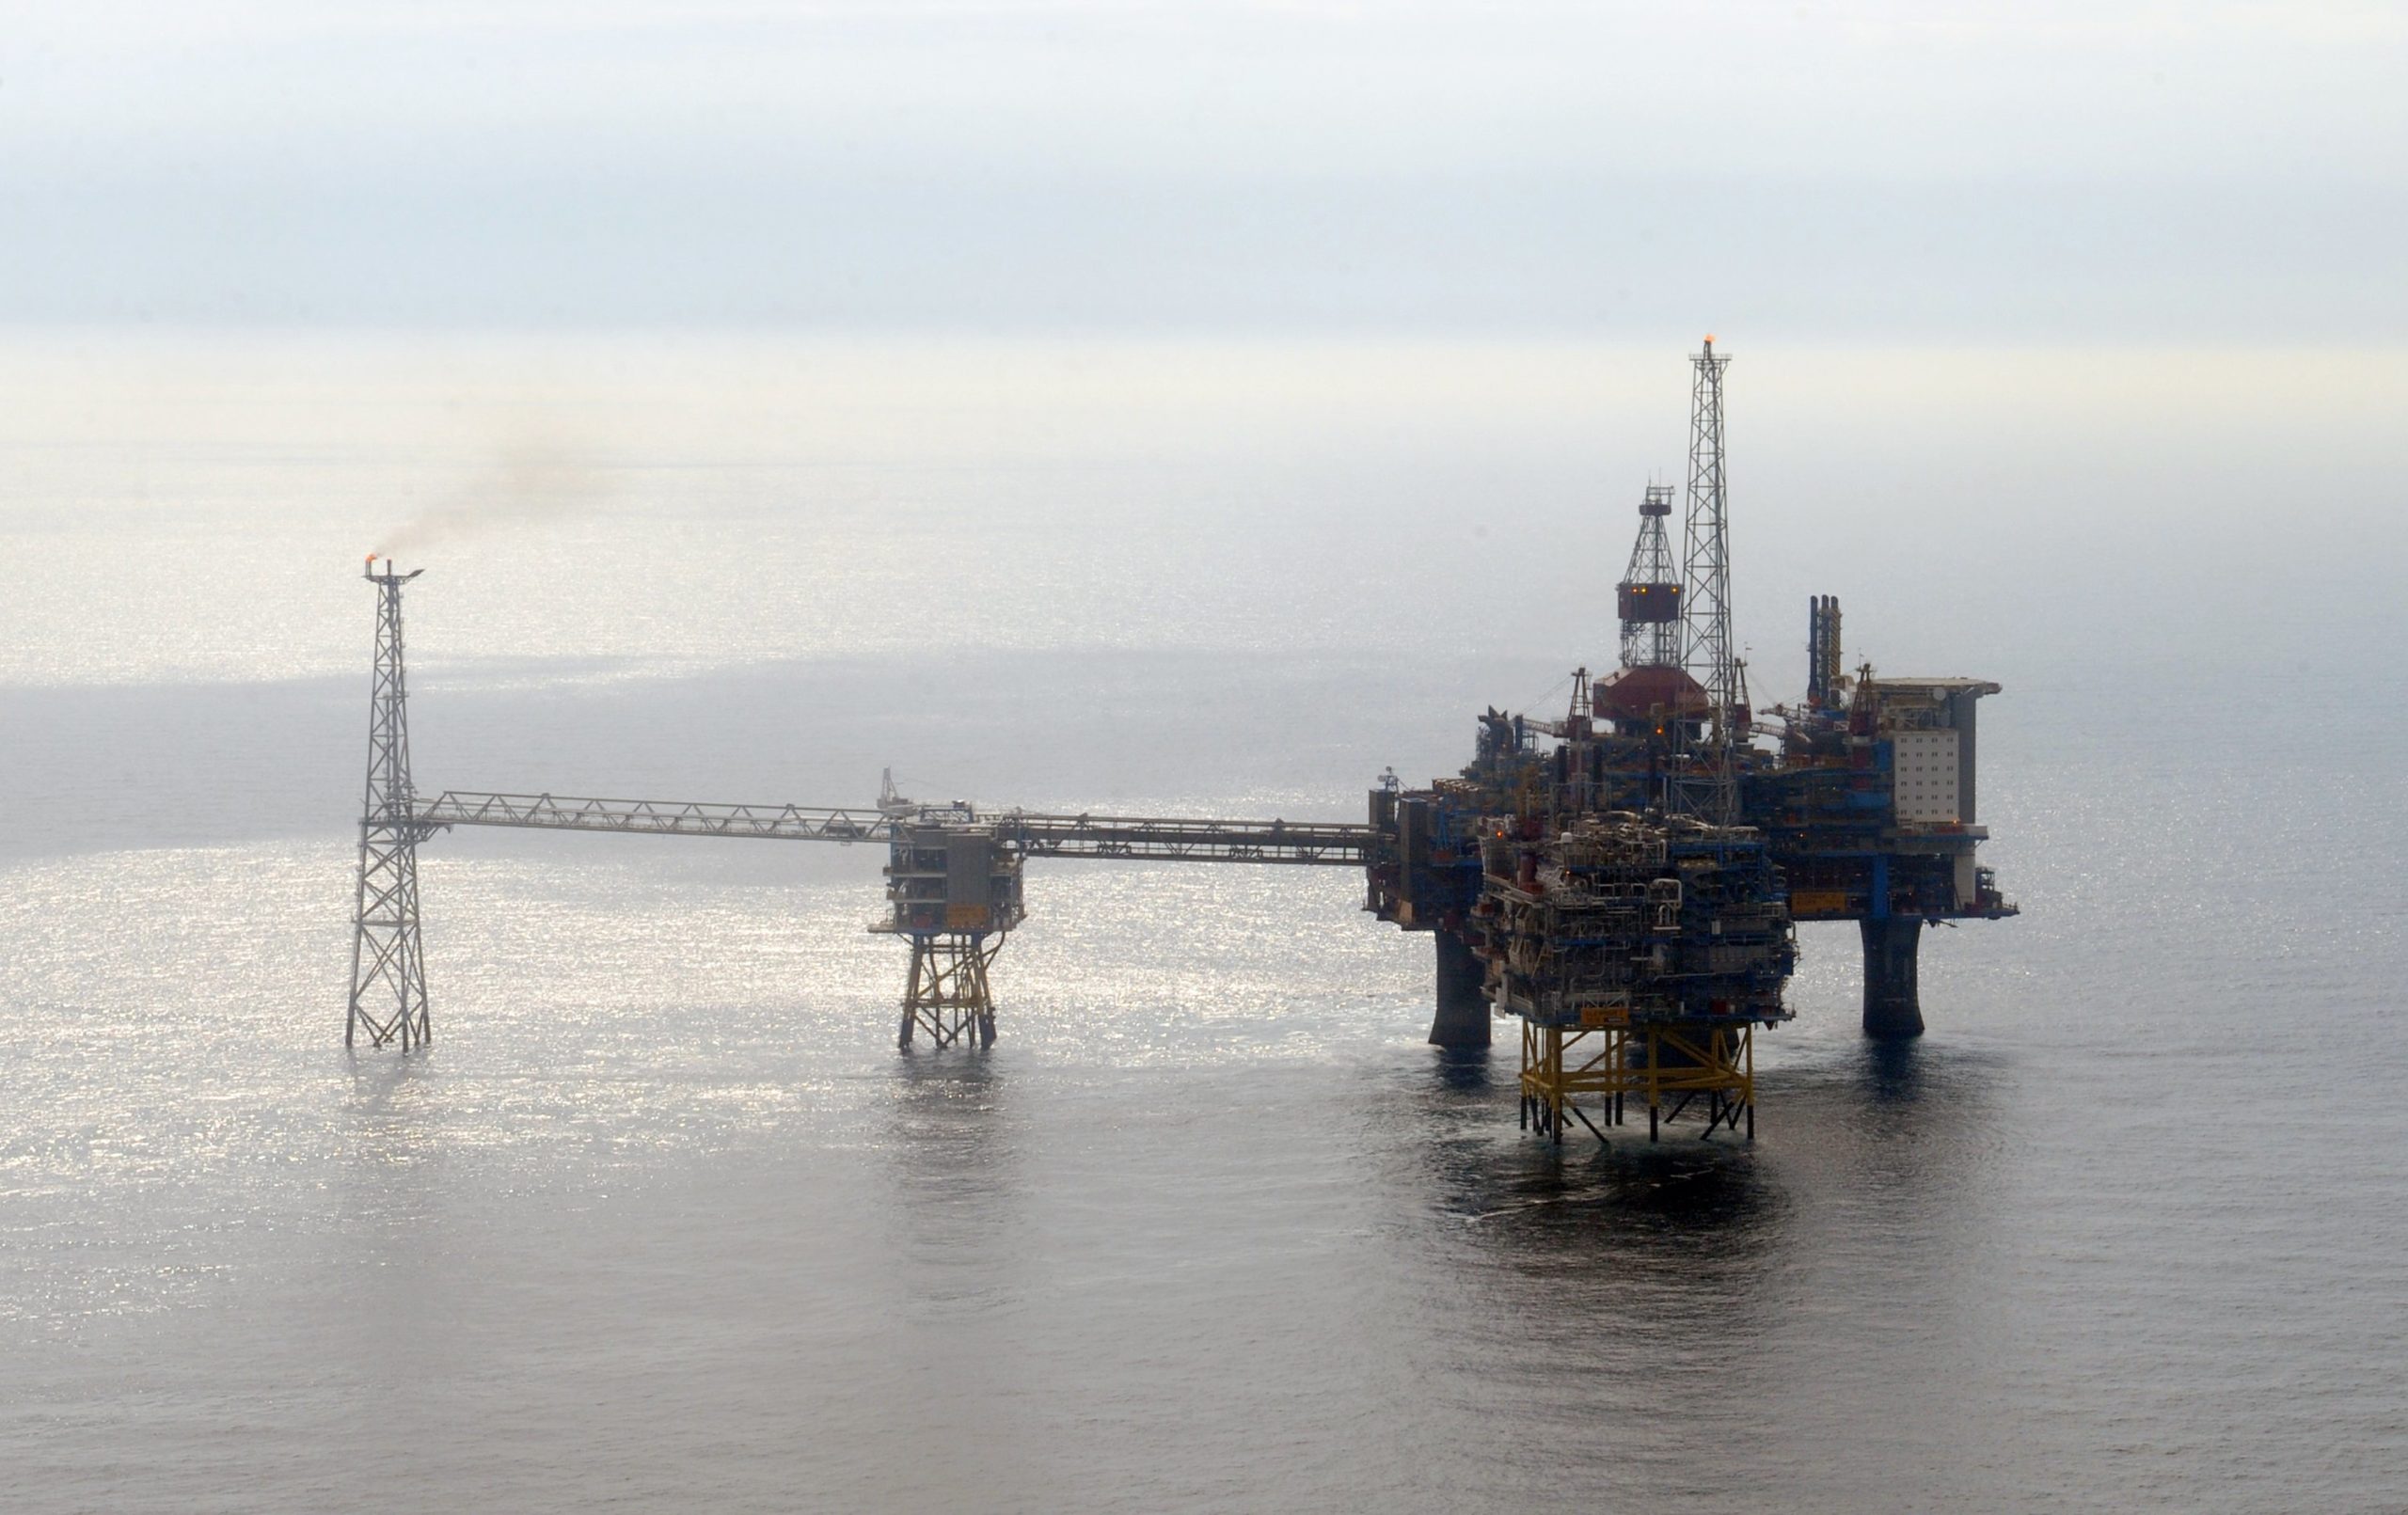 Does Norwegian constitution allow drilling oil in polar region?